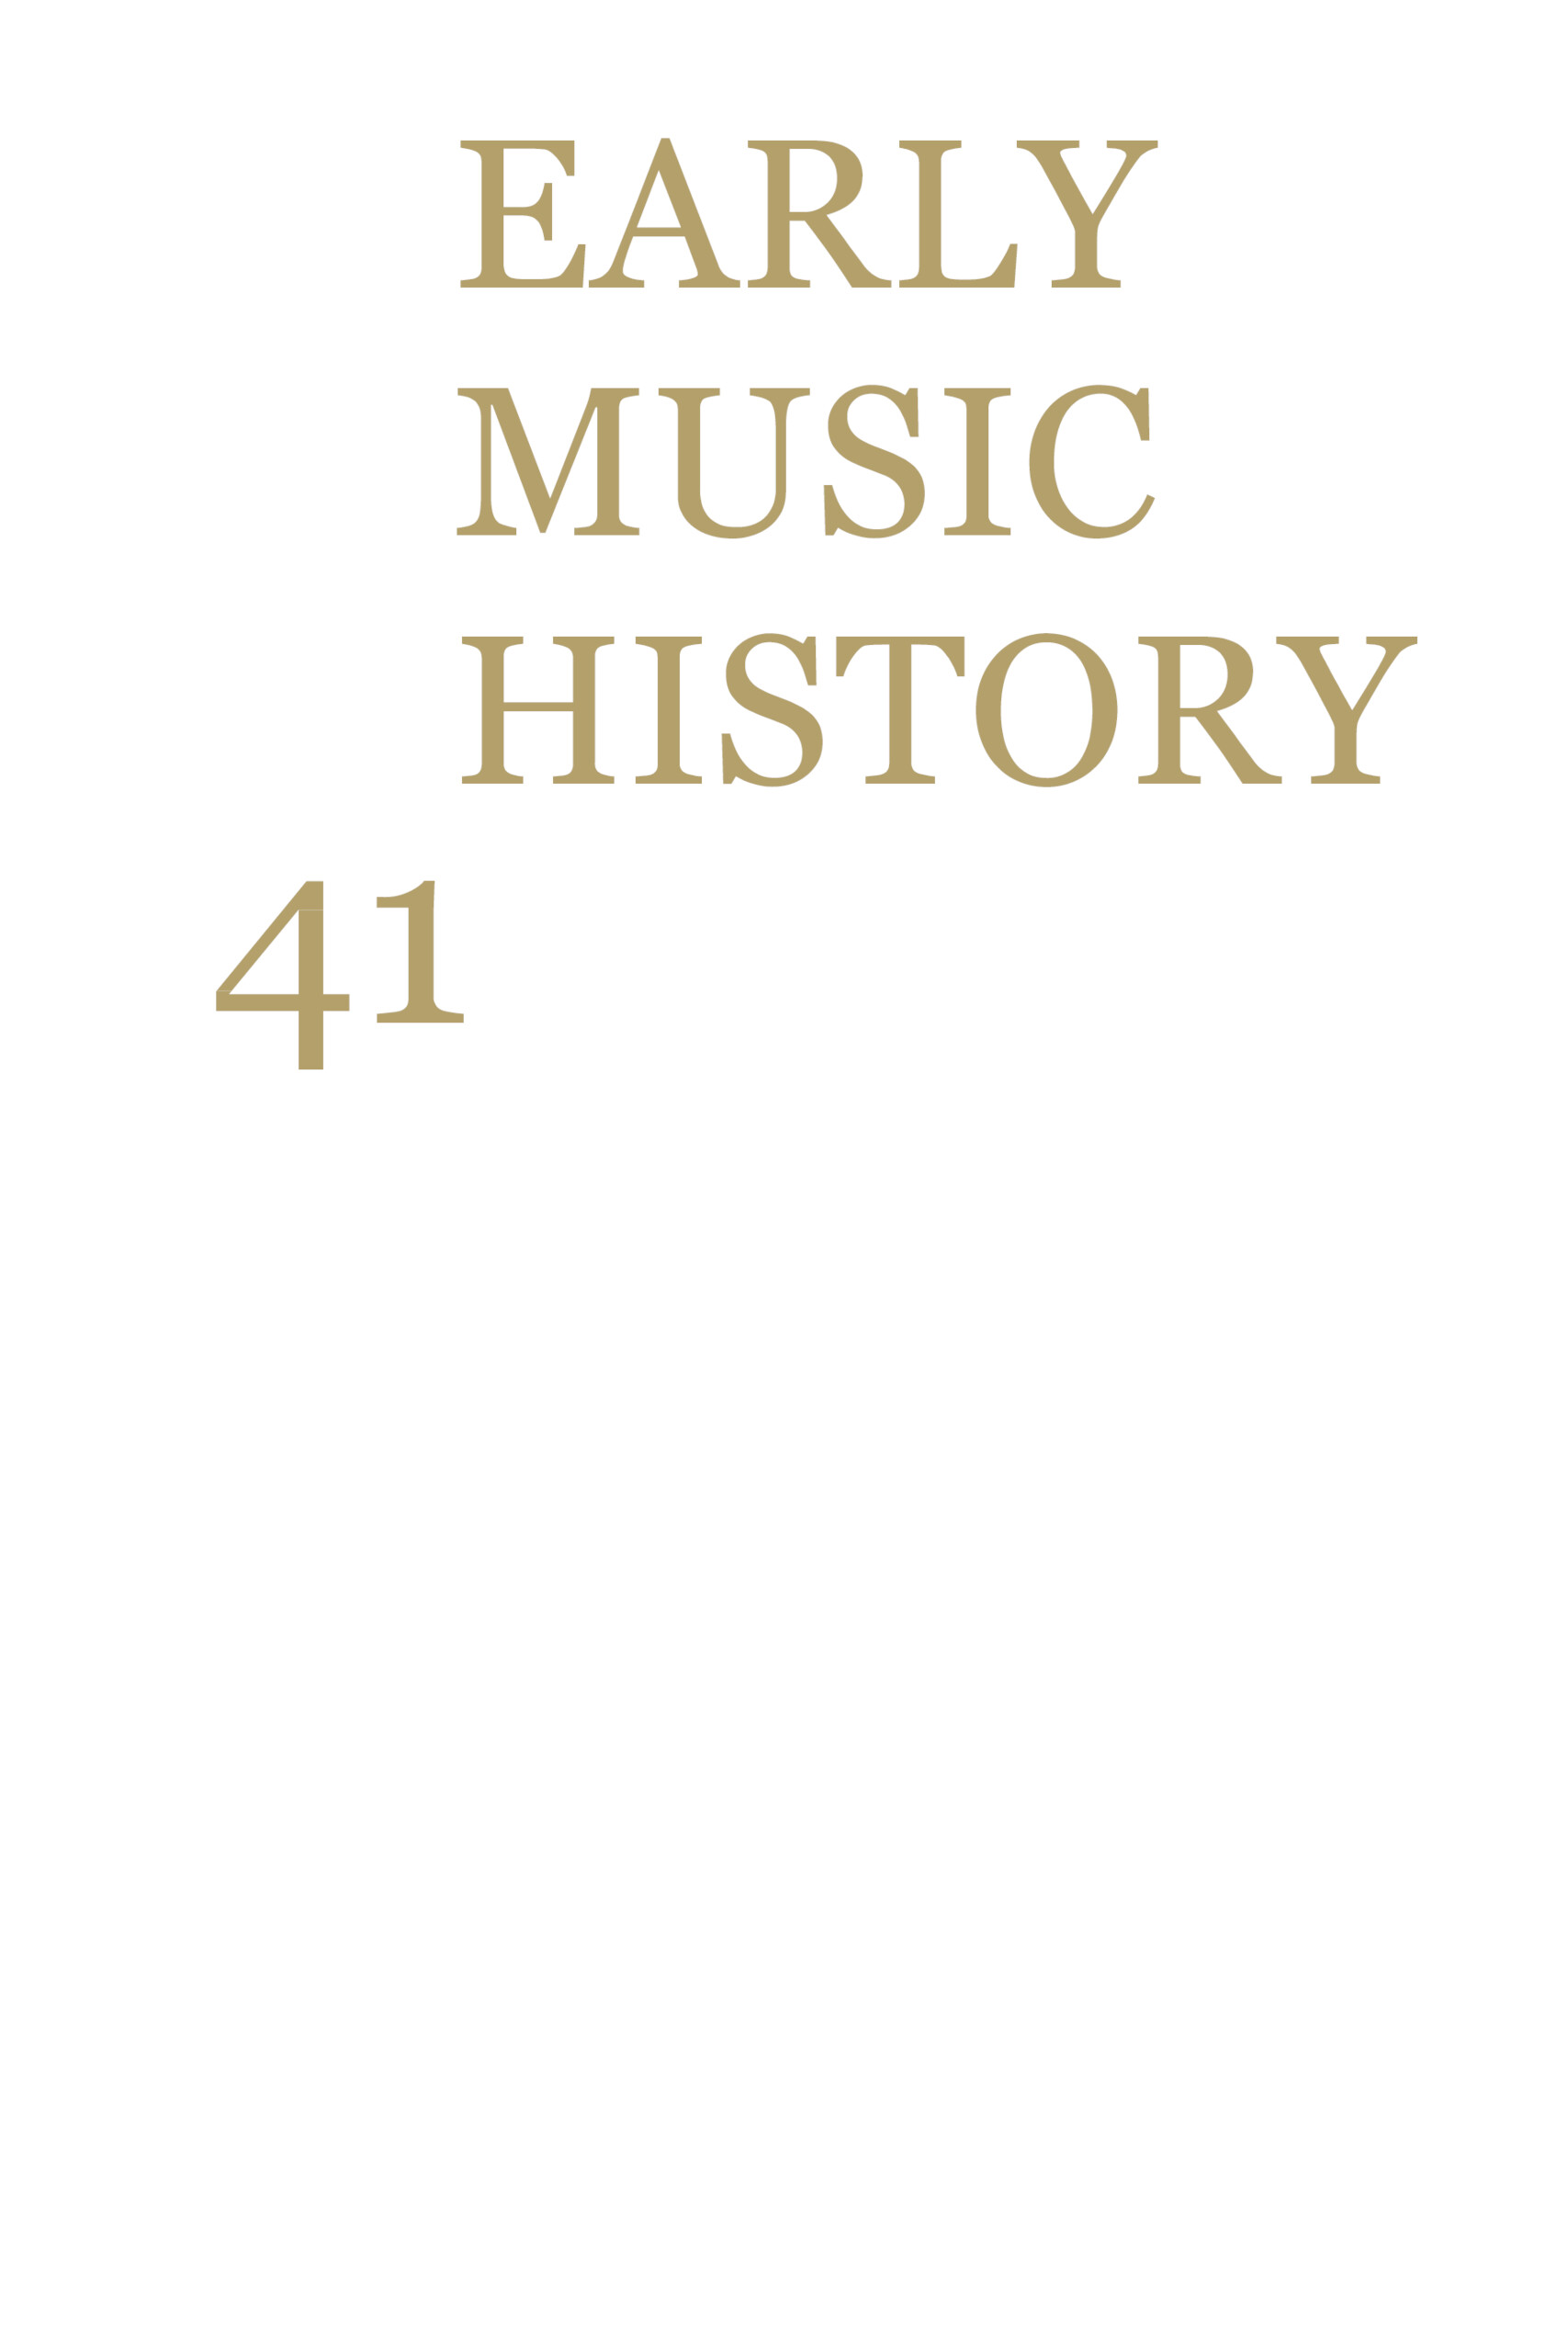 The Requiem of Tomás Luis de Victoria (1603) (Music in Context) (English  Edition) - eBooks em Inglês na